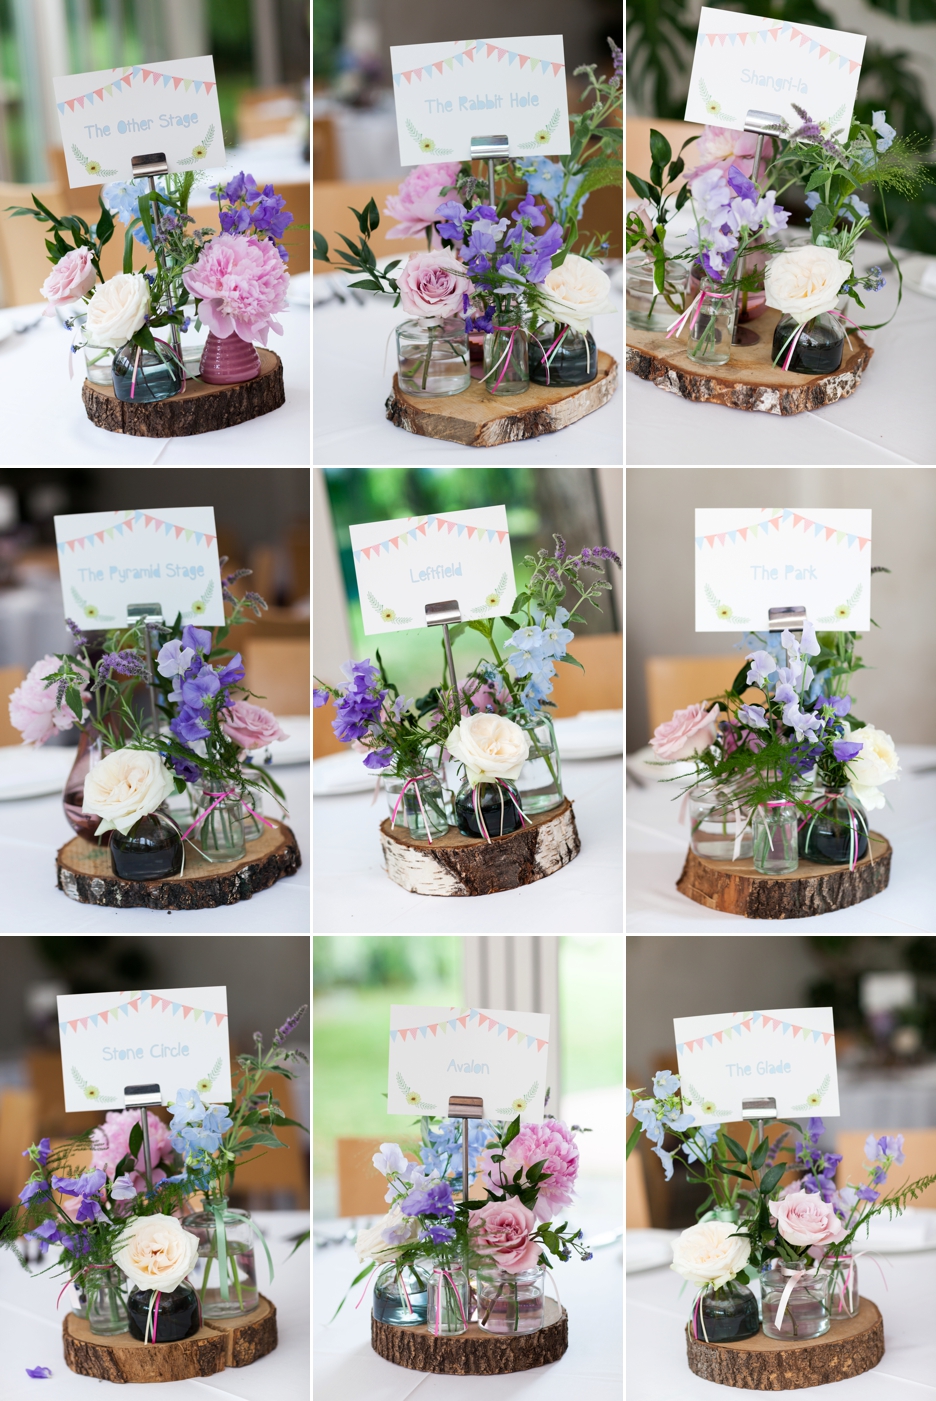 Wedding photography at Ridge Farm Studios, Dorking, Surrey. Flowers & table decorations.